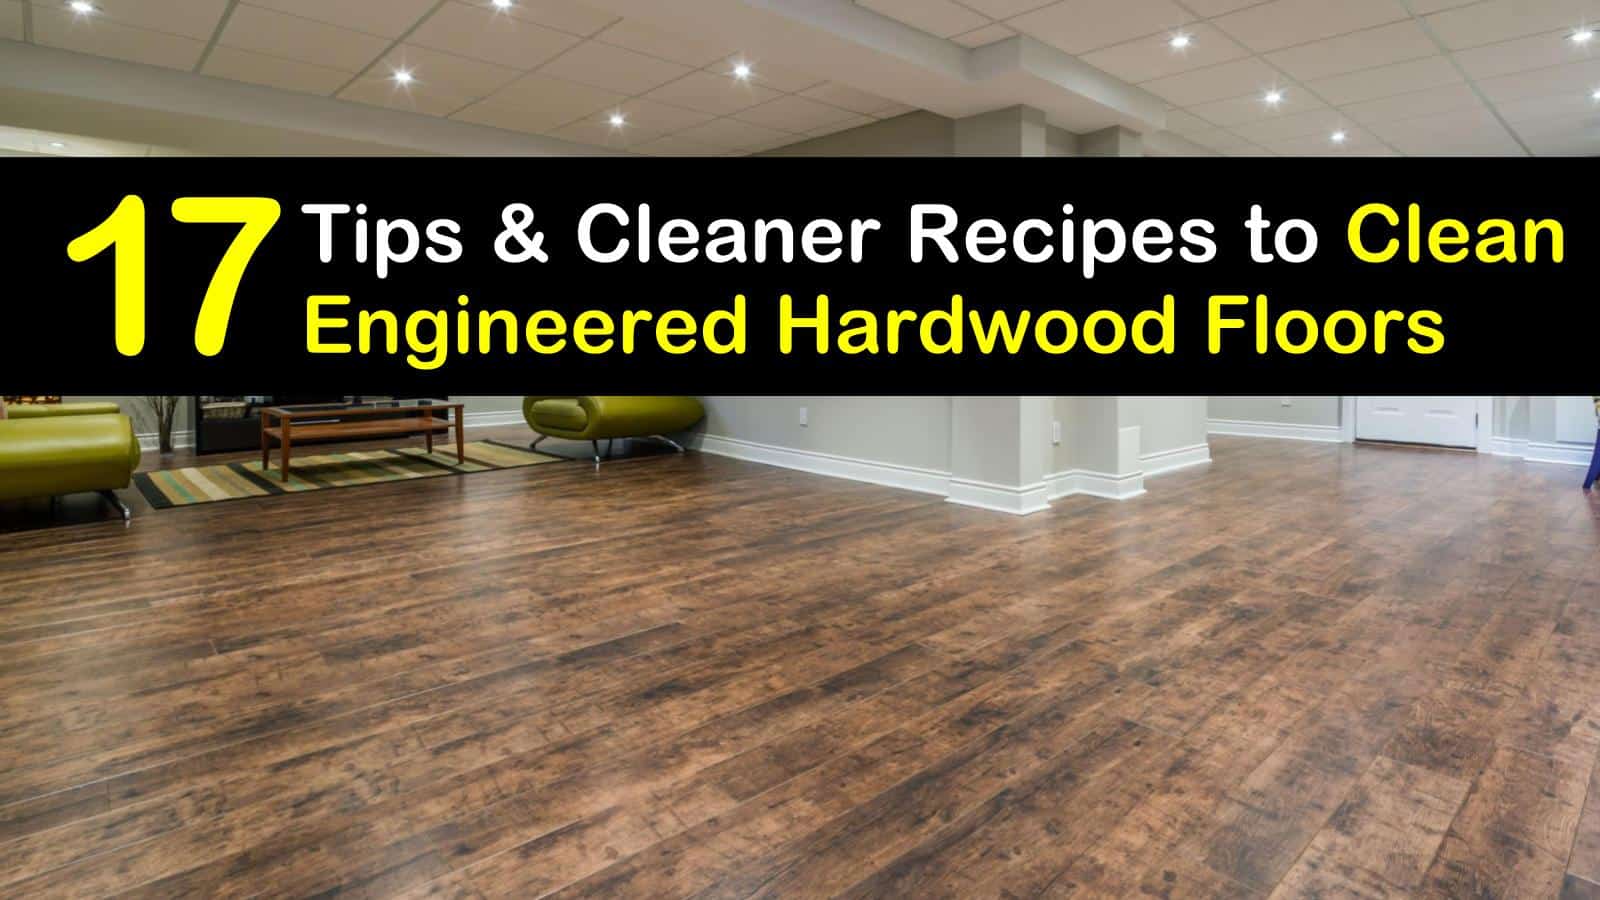 Clean Engineered Hardwood Floors, Removing Scuffs From Engineered Hardwood Floors